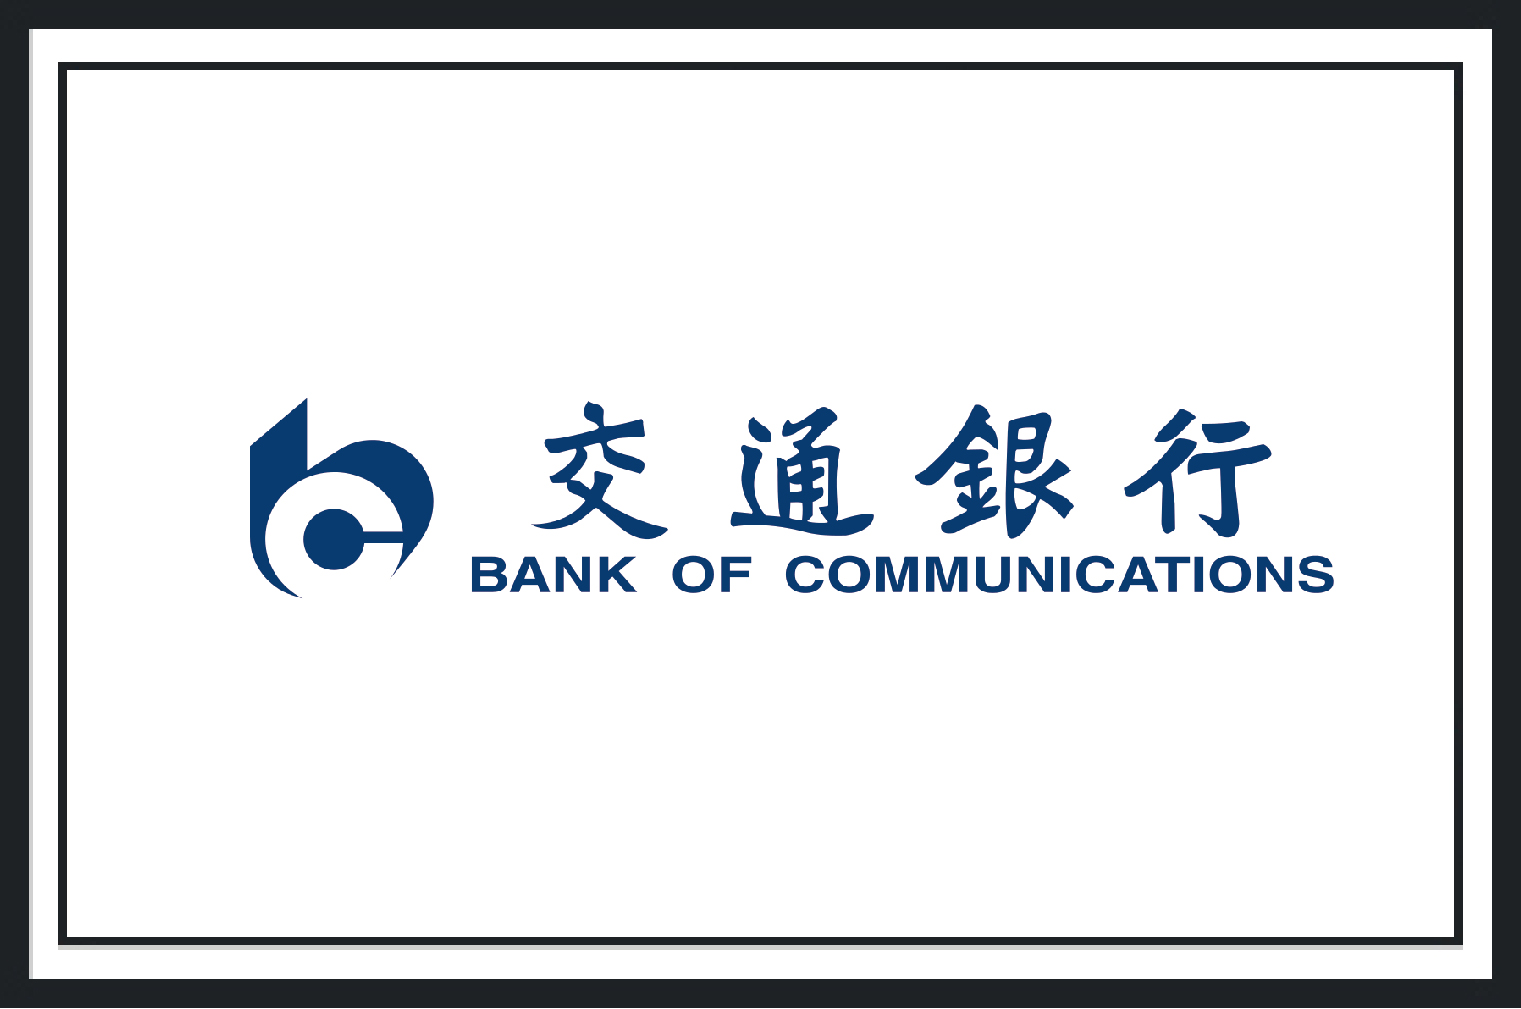 Bank of communications